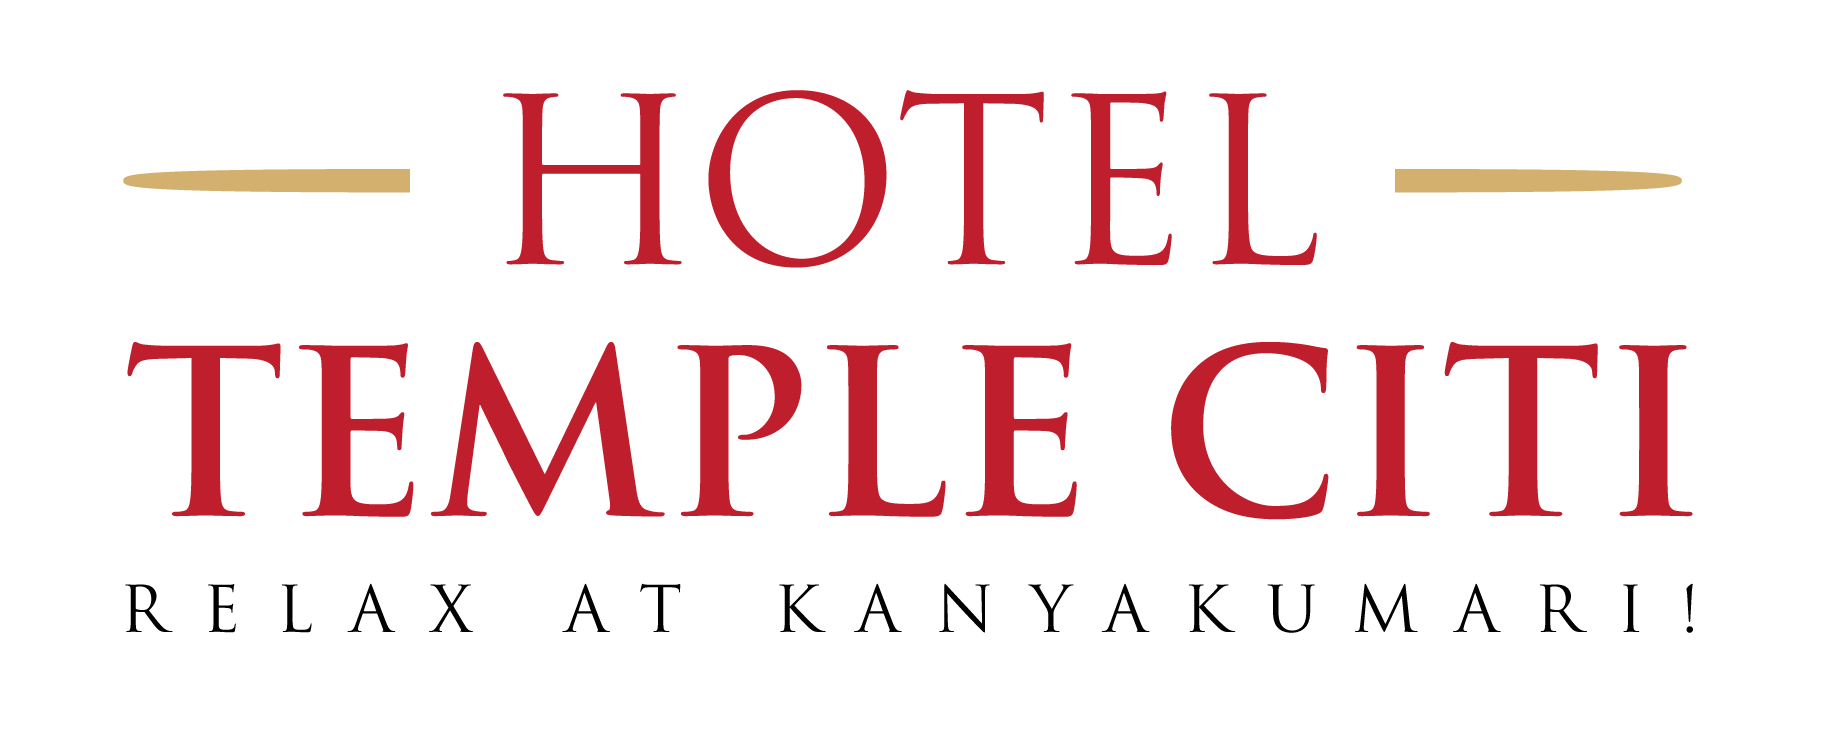 Hotels in Kanyakumari near beach